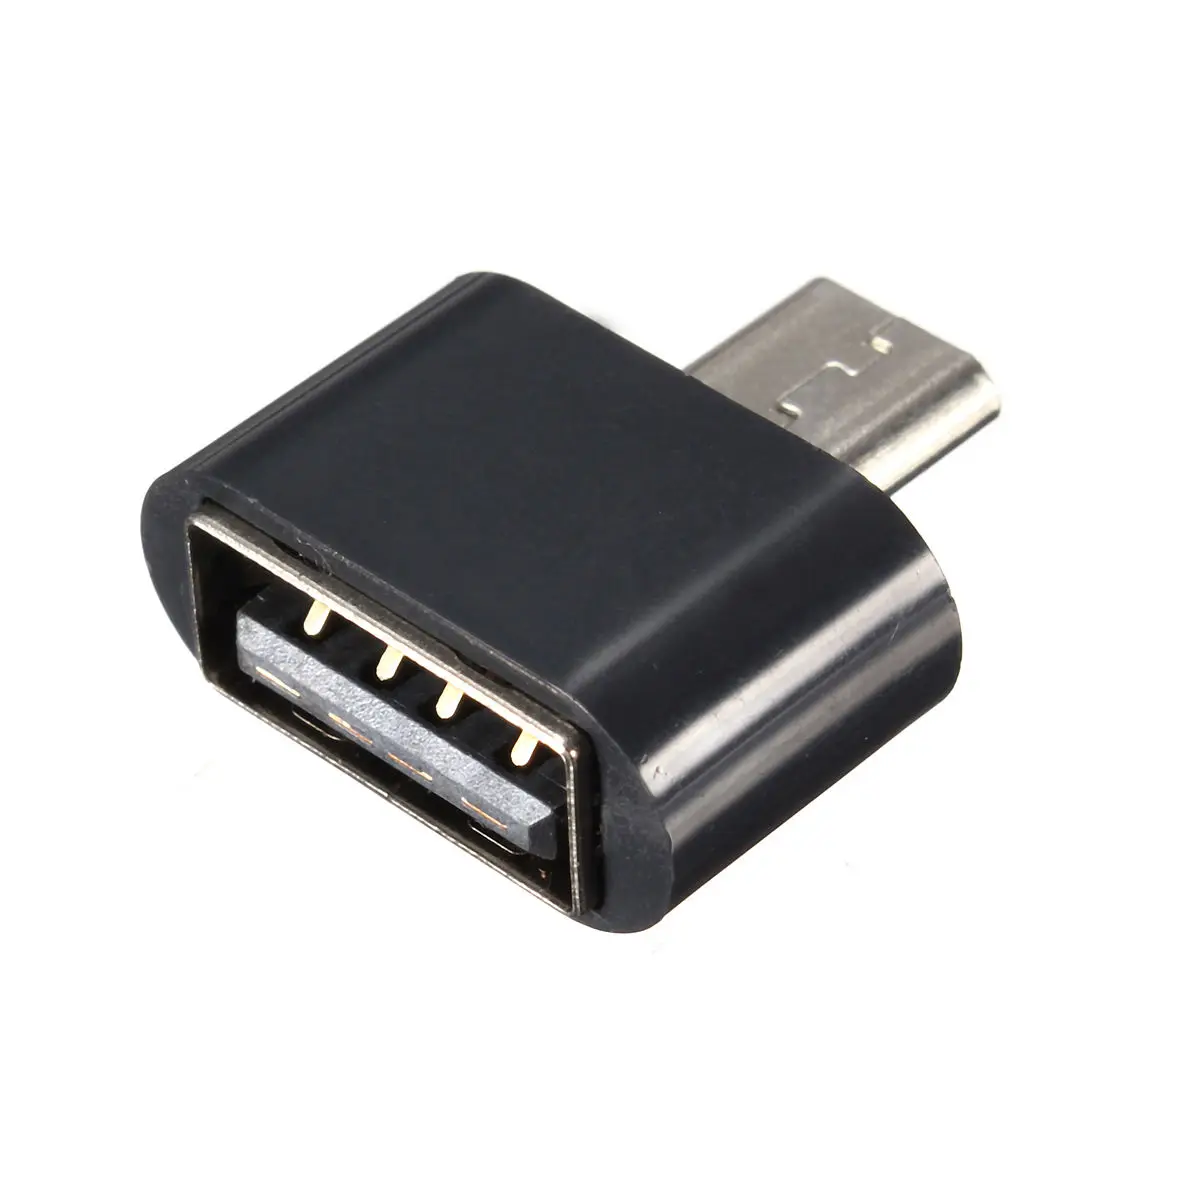 OTG адаптер Micro USB к USB 2,0 конвертер OTG кабель для samsung Xiaomi Android телефонов планшетных ПК флэш-Мышь Клавиатура OTG - Цвет: Черный